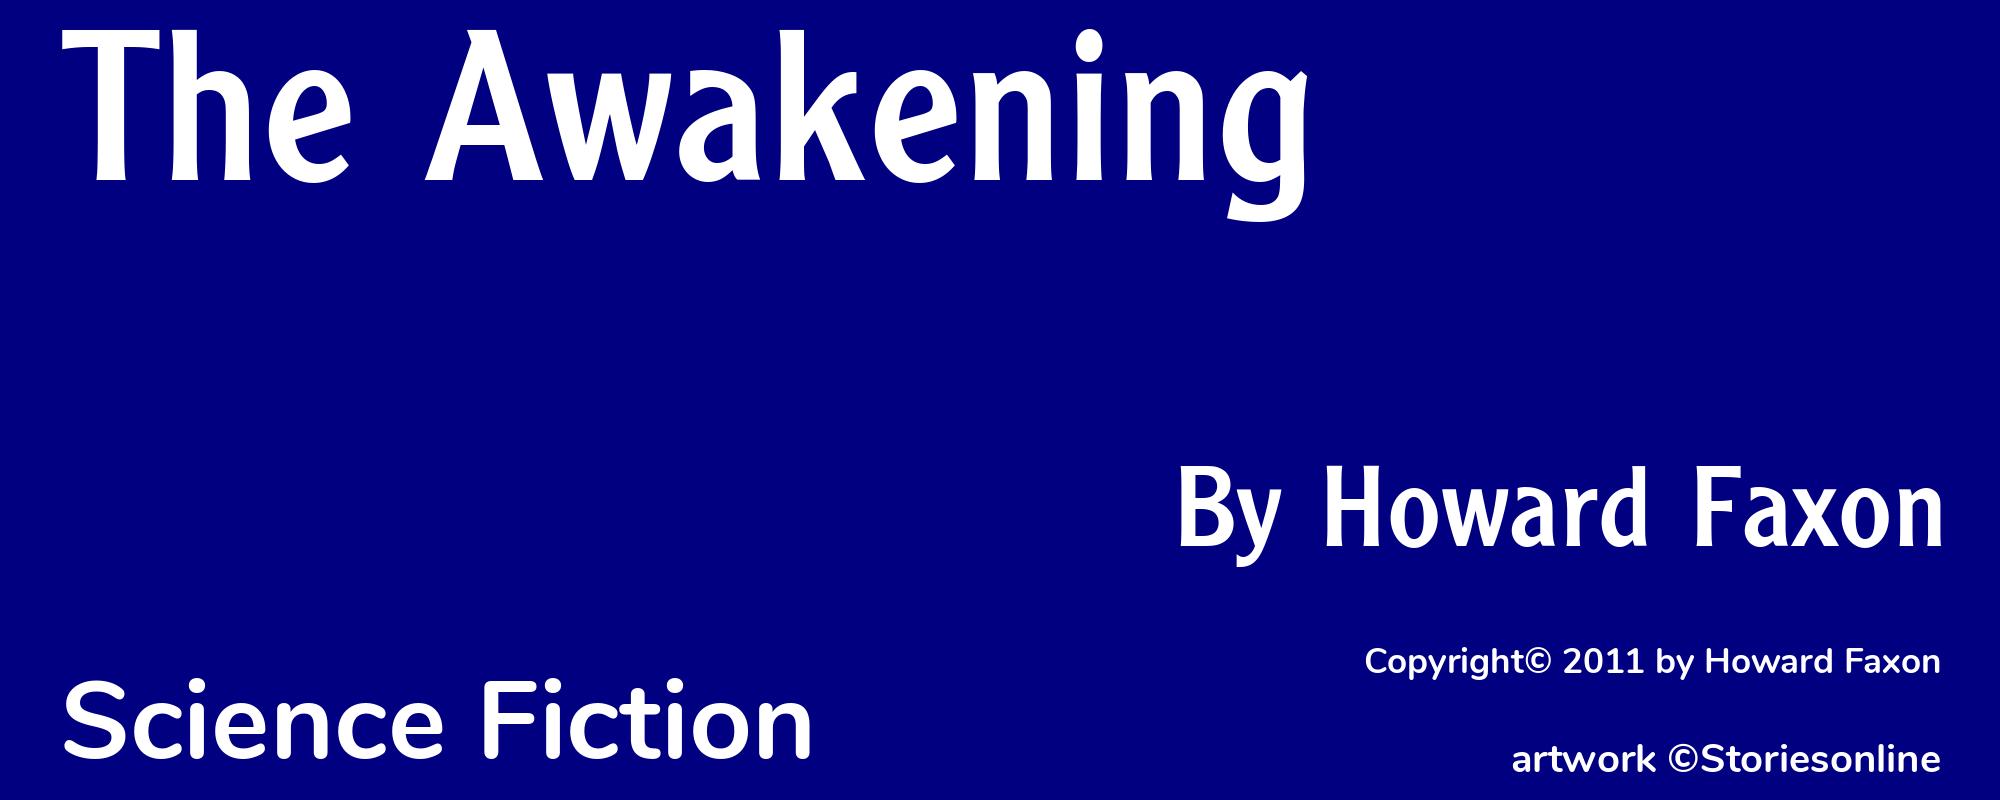 The Awakening - Cover